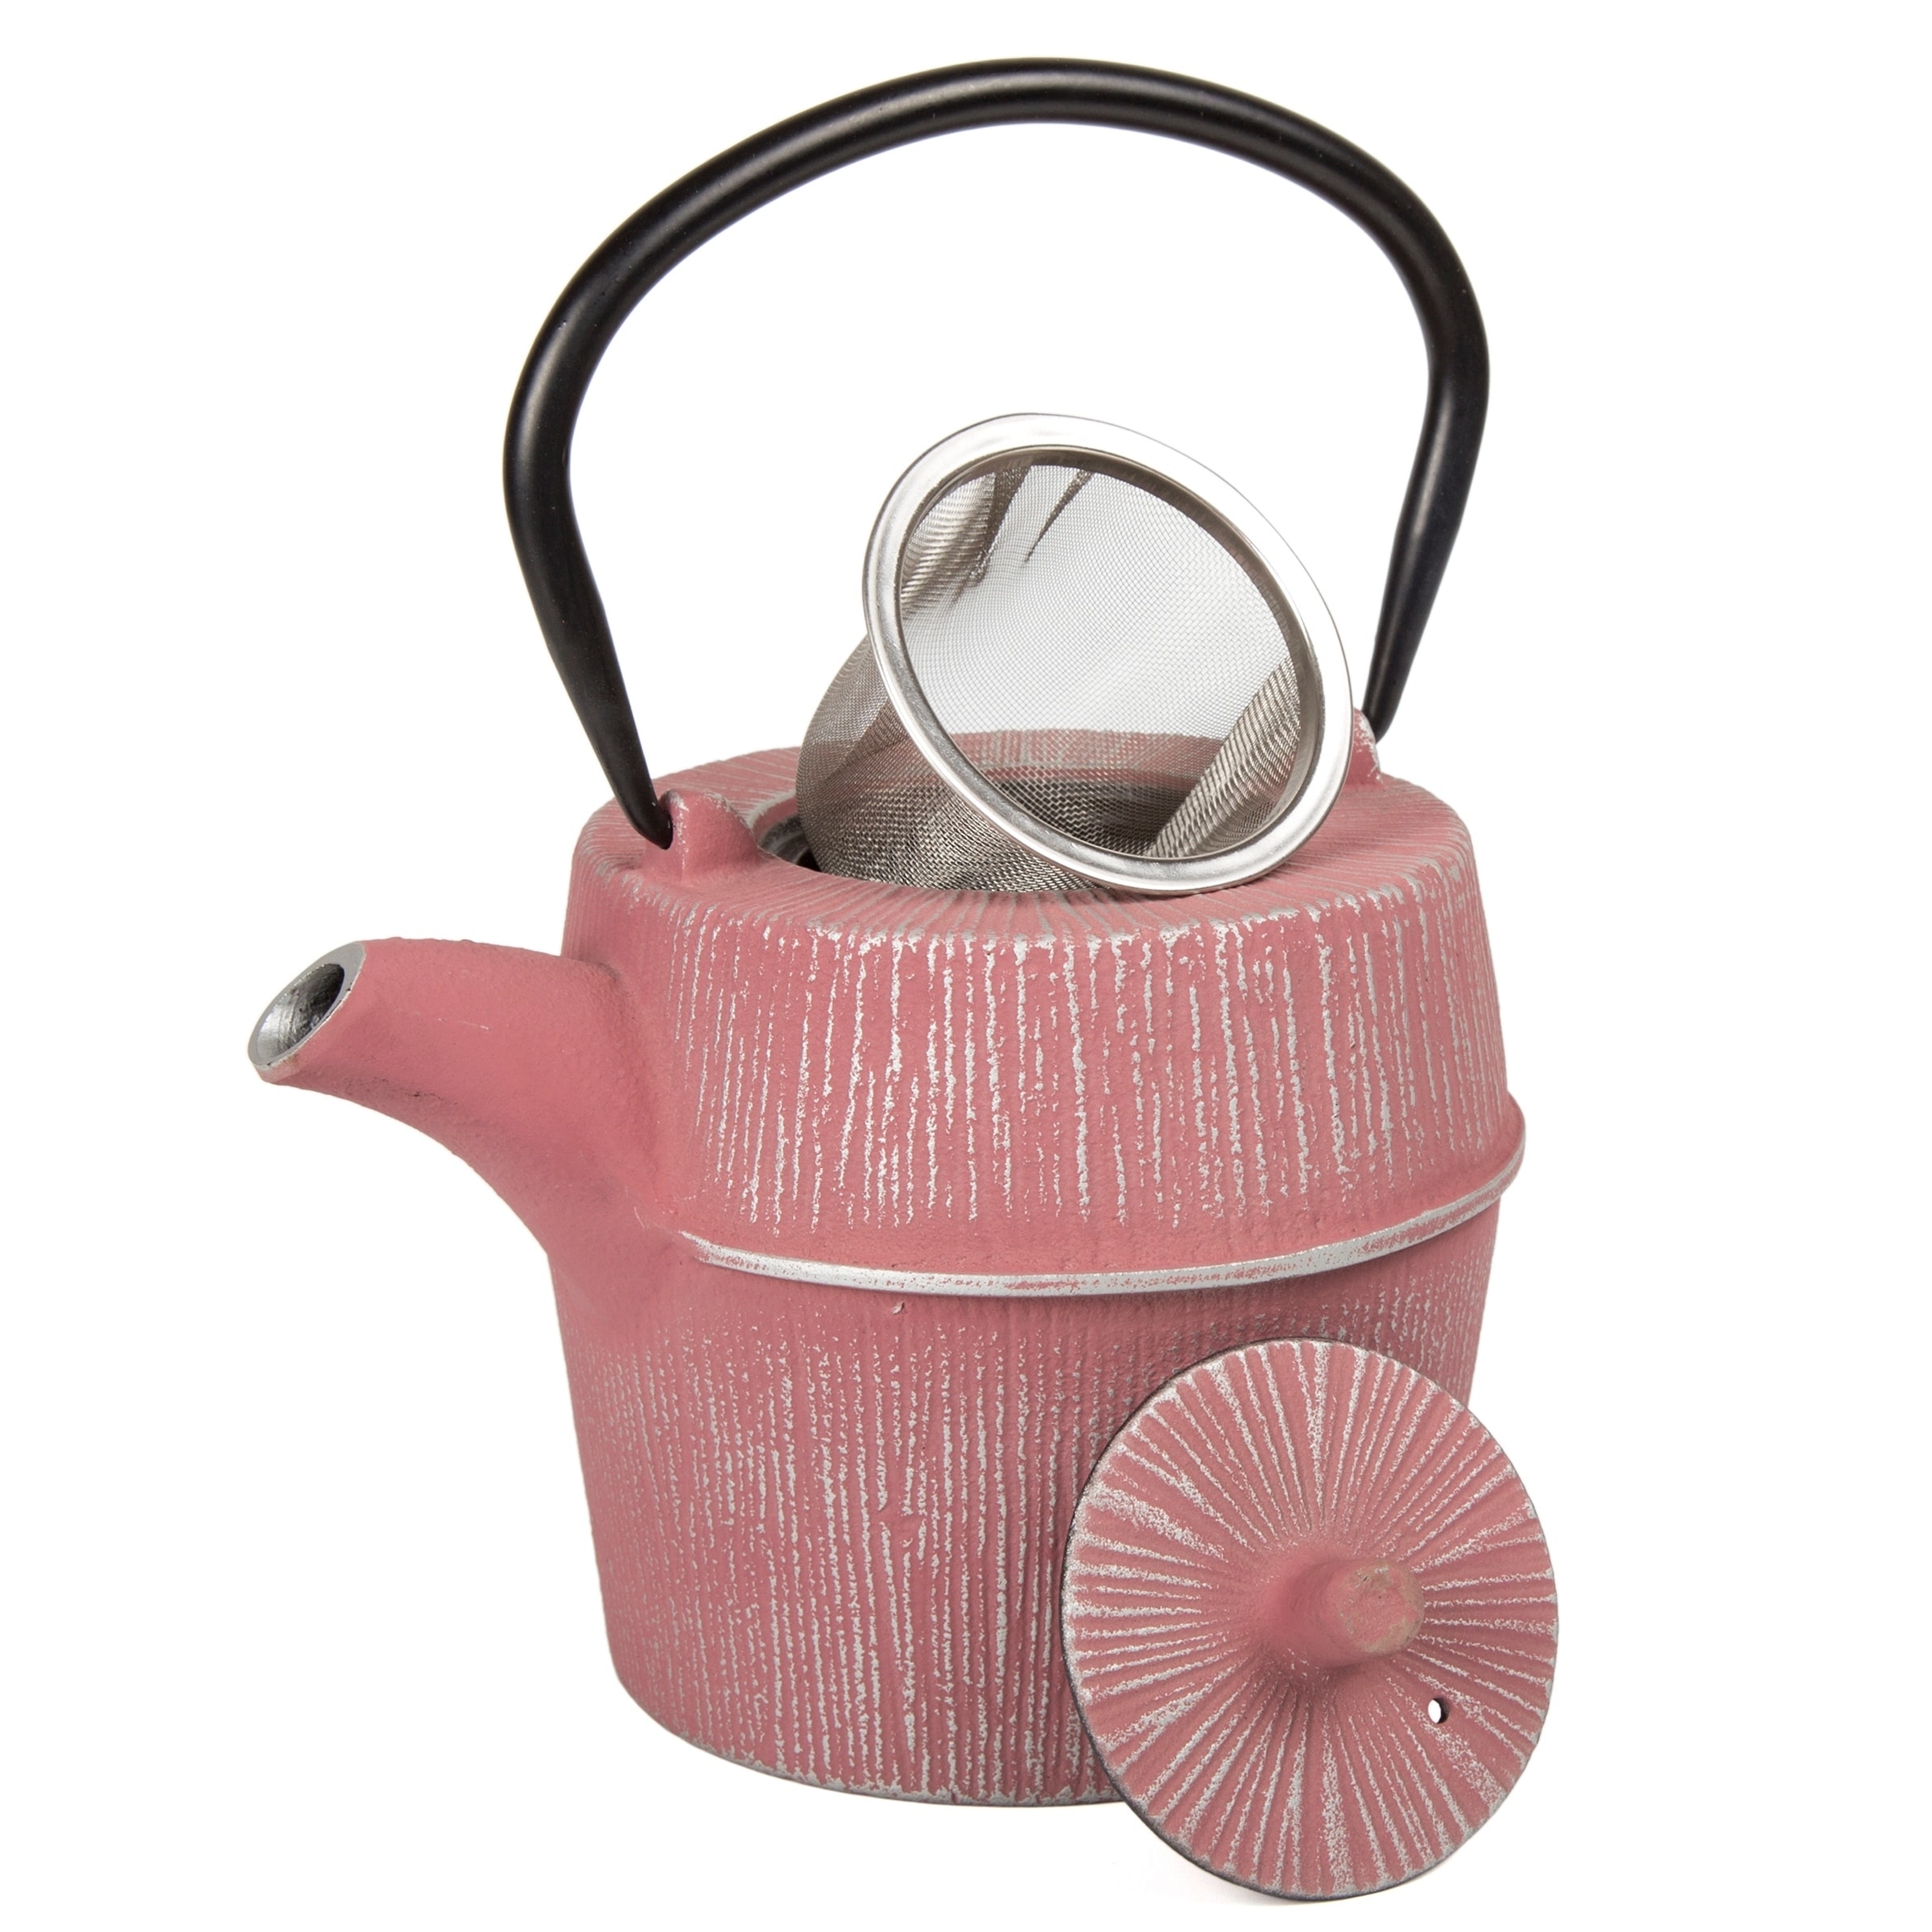 https://ak1.ostkcdn.com/images/products/30263416/Creative-Home-29-oz-Cast-Iron-Tea-Pot-Silver-and-Pink-Color-ed065f19-fada-4bb5-a52e-7a22994c5559.jpg